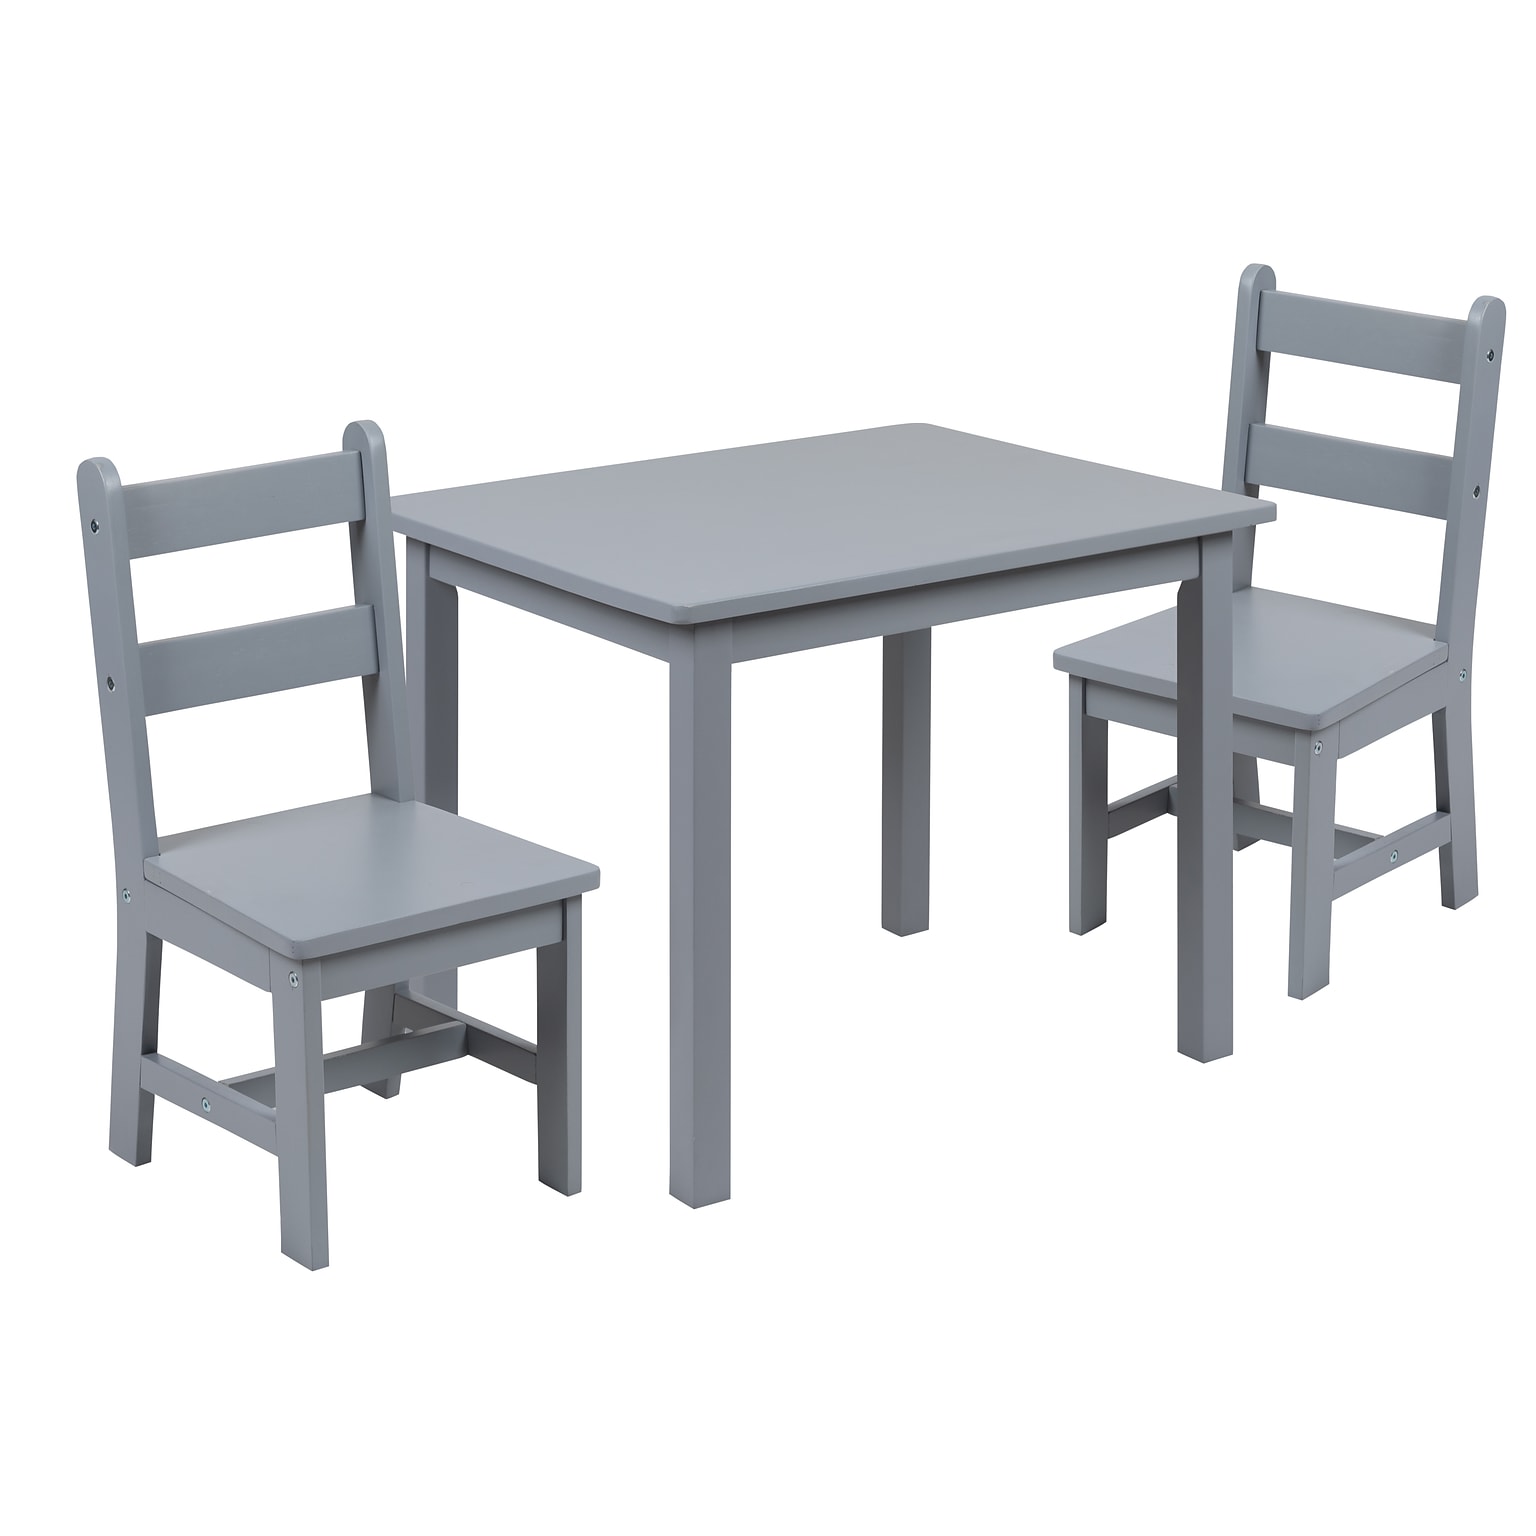 Flash Furniture Kyndl Kids Square Activity Table Set, 20 x 24, Gray (TWWTCS1001GRY)